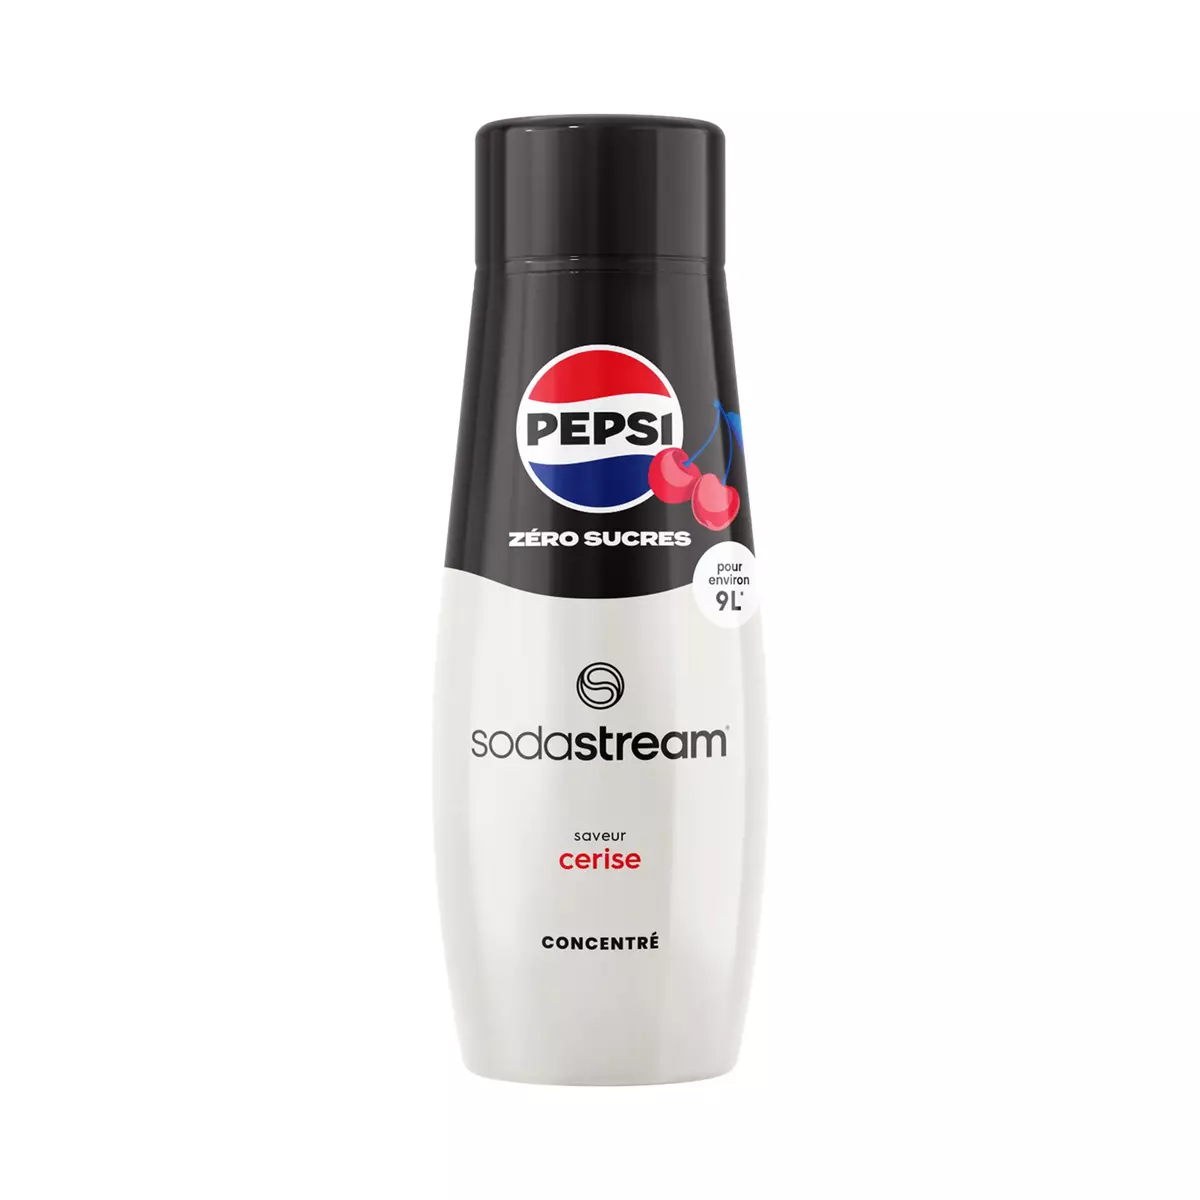 SODASTREAM Concentré Pepsi max cerise 300117 - Noir